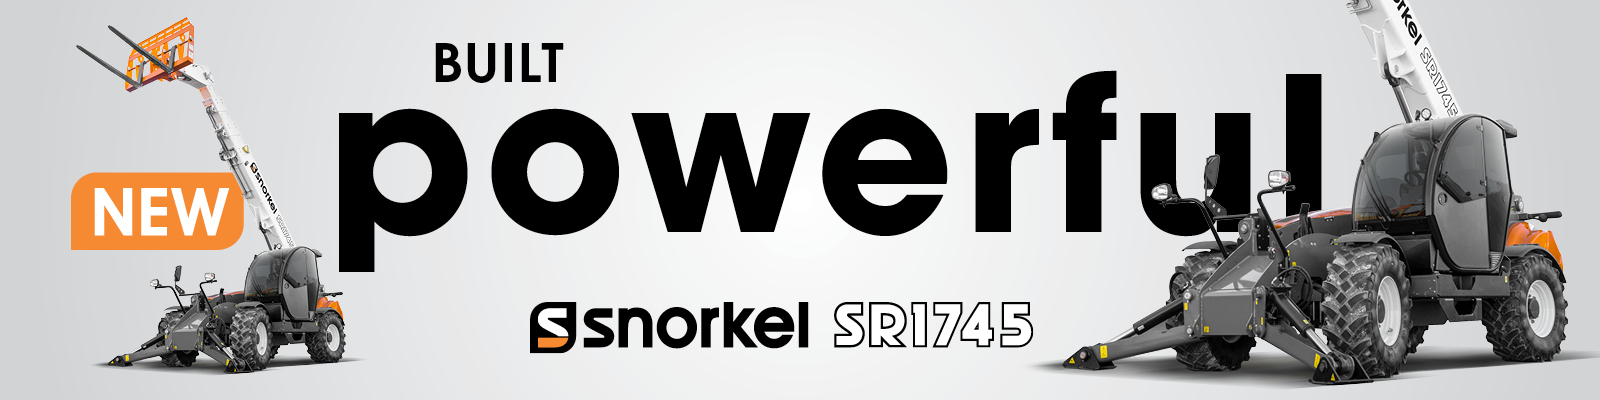 Snorkel SR1745 - Built Powerful